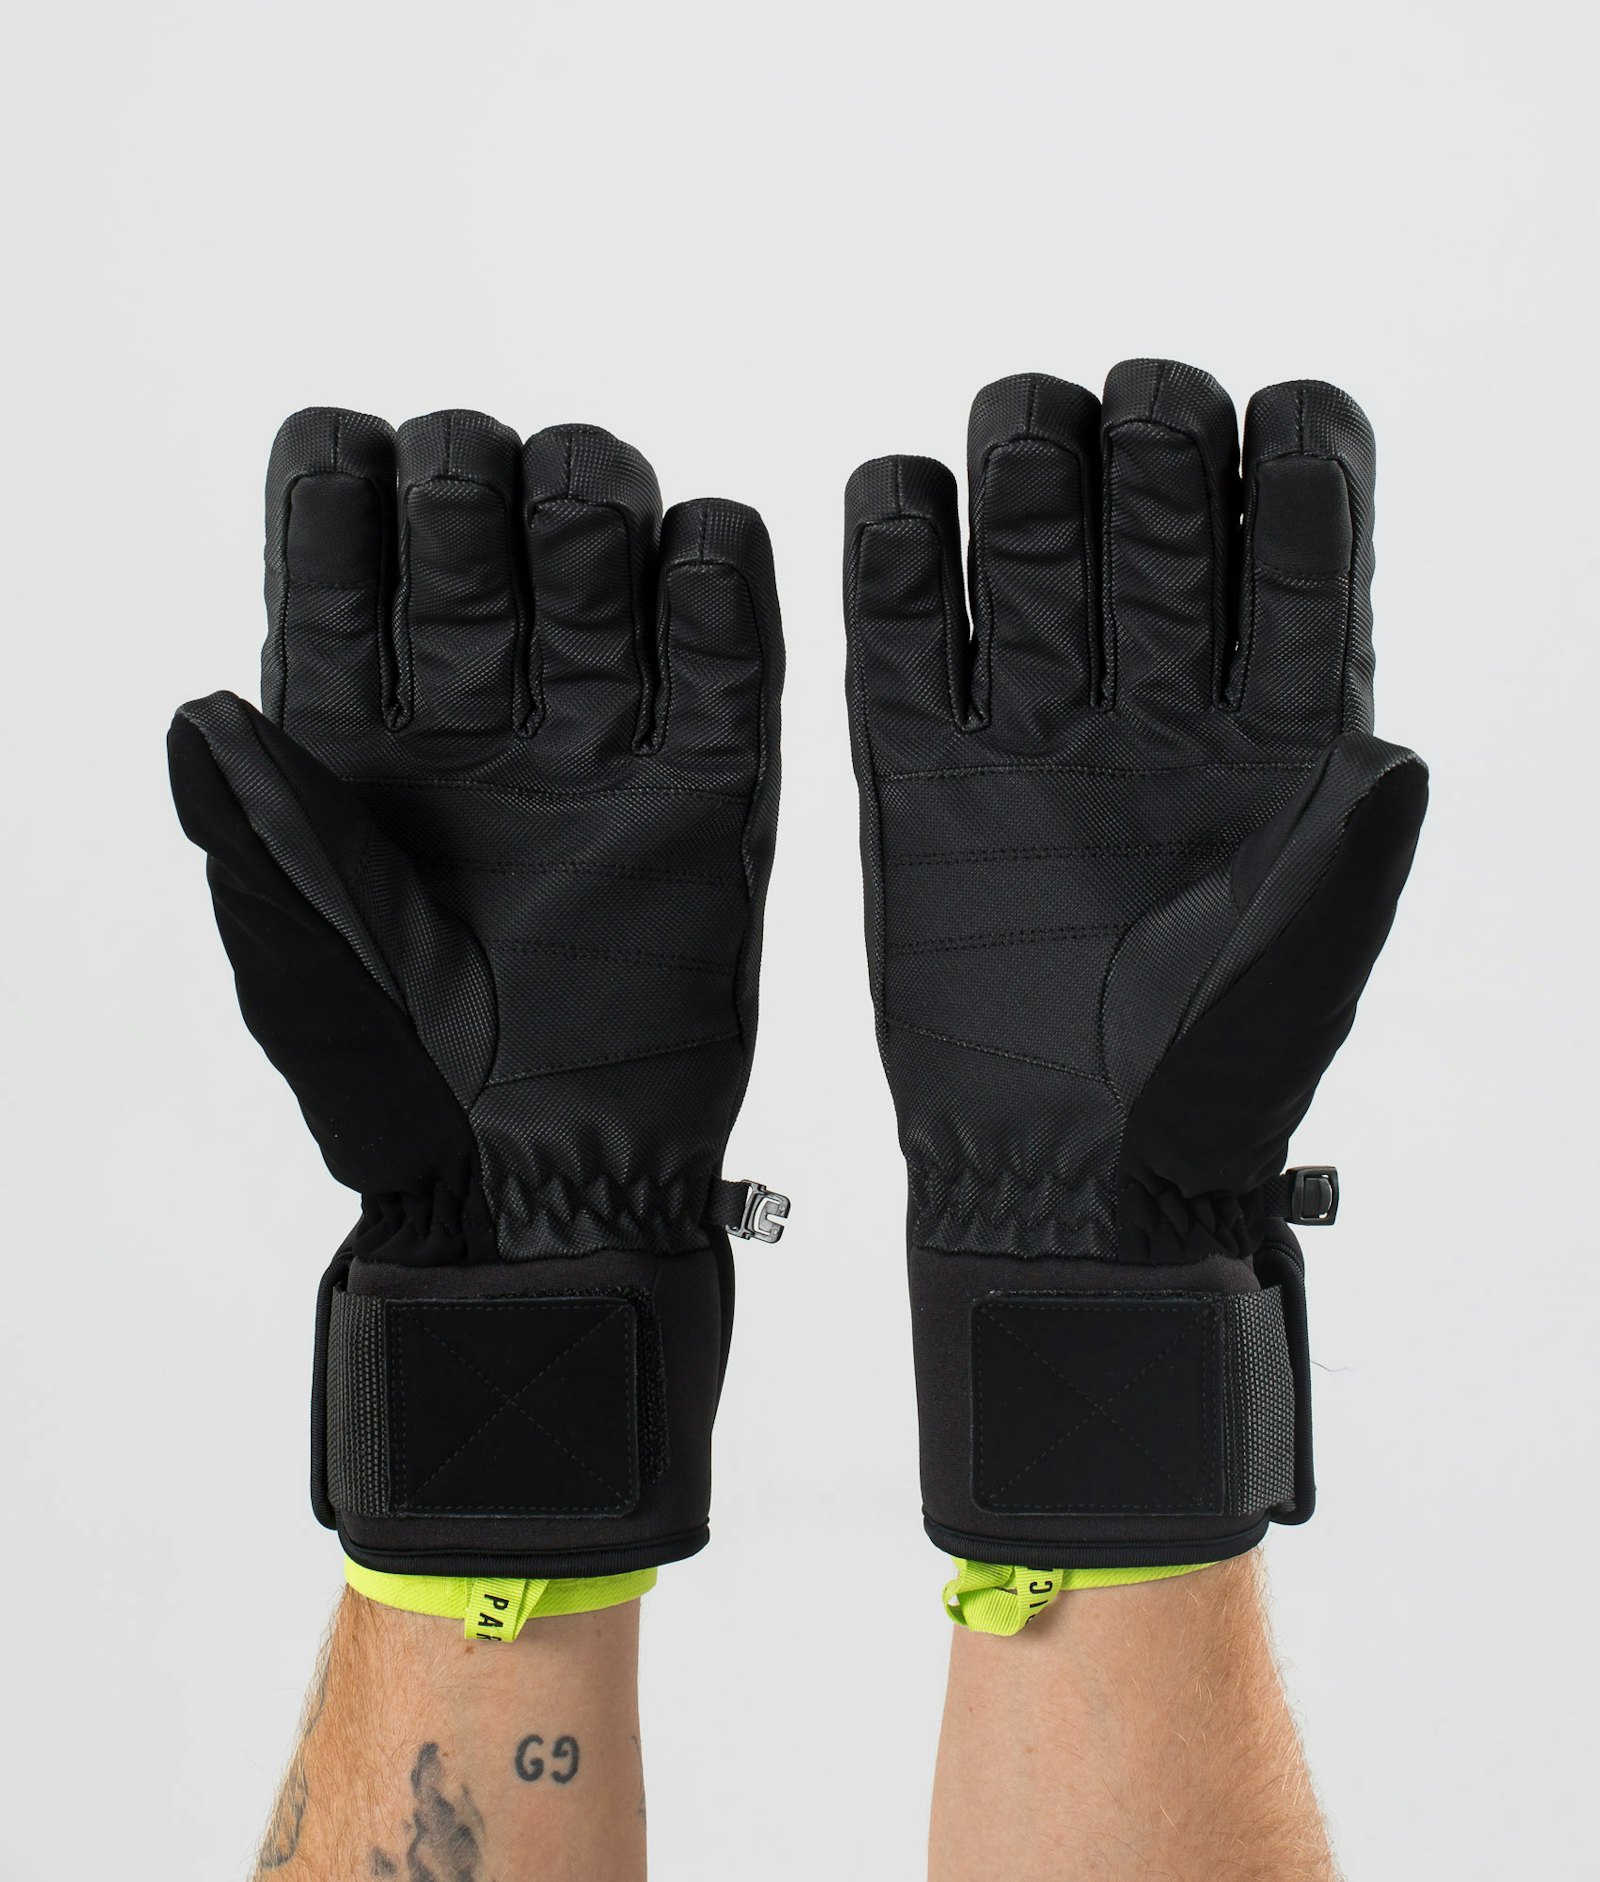 Ace Ski Gloves Gold